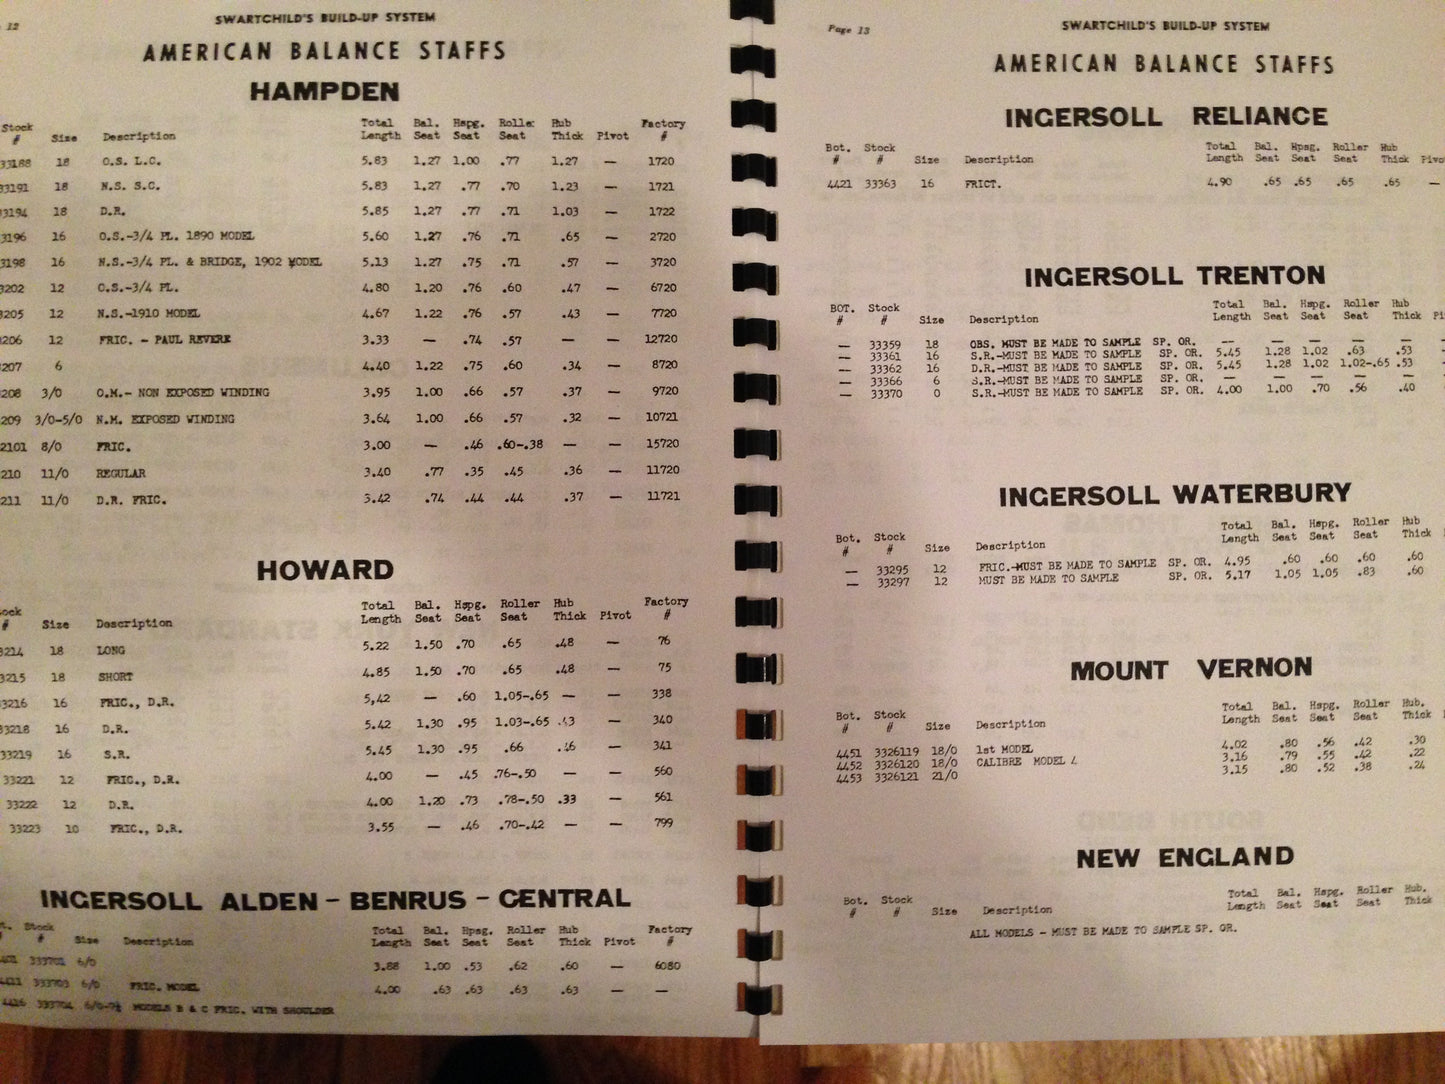 Swartchild & Co Chart Book for American Balance Staffs - reprint